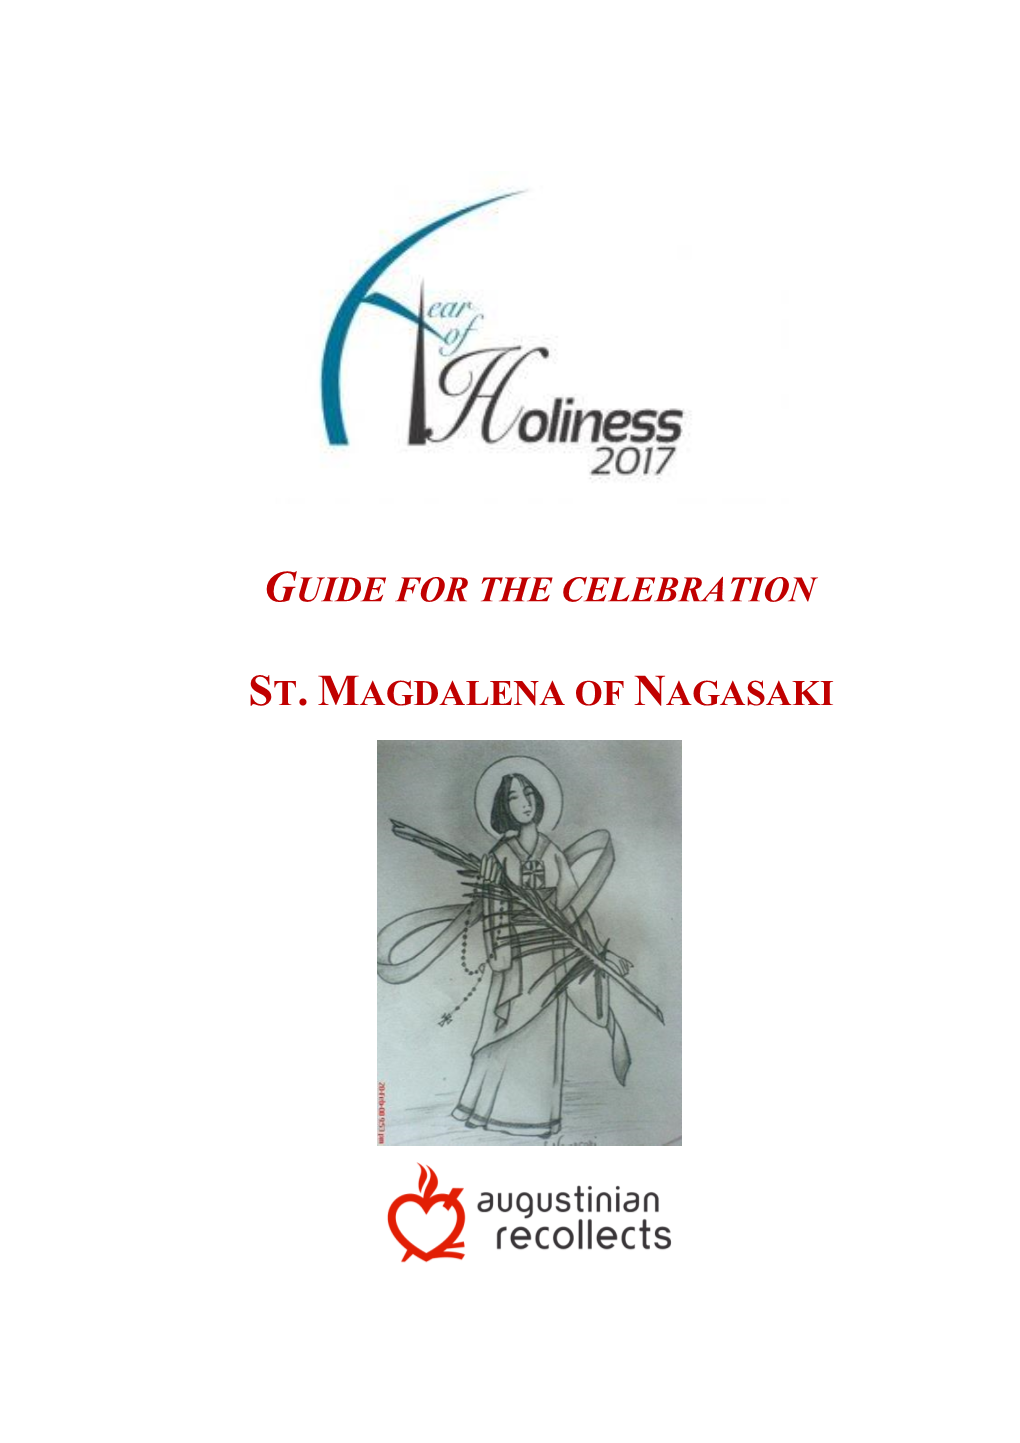 Guide for the Celebration St. Magdalena of Nagasaki